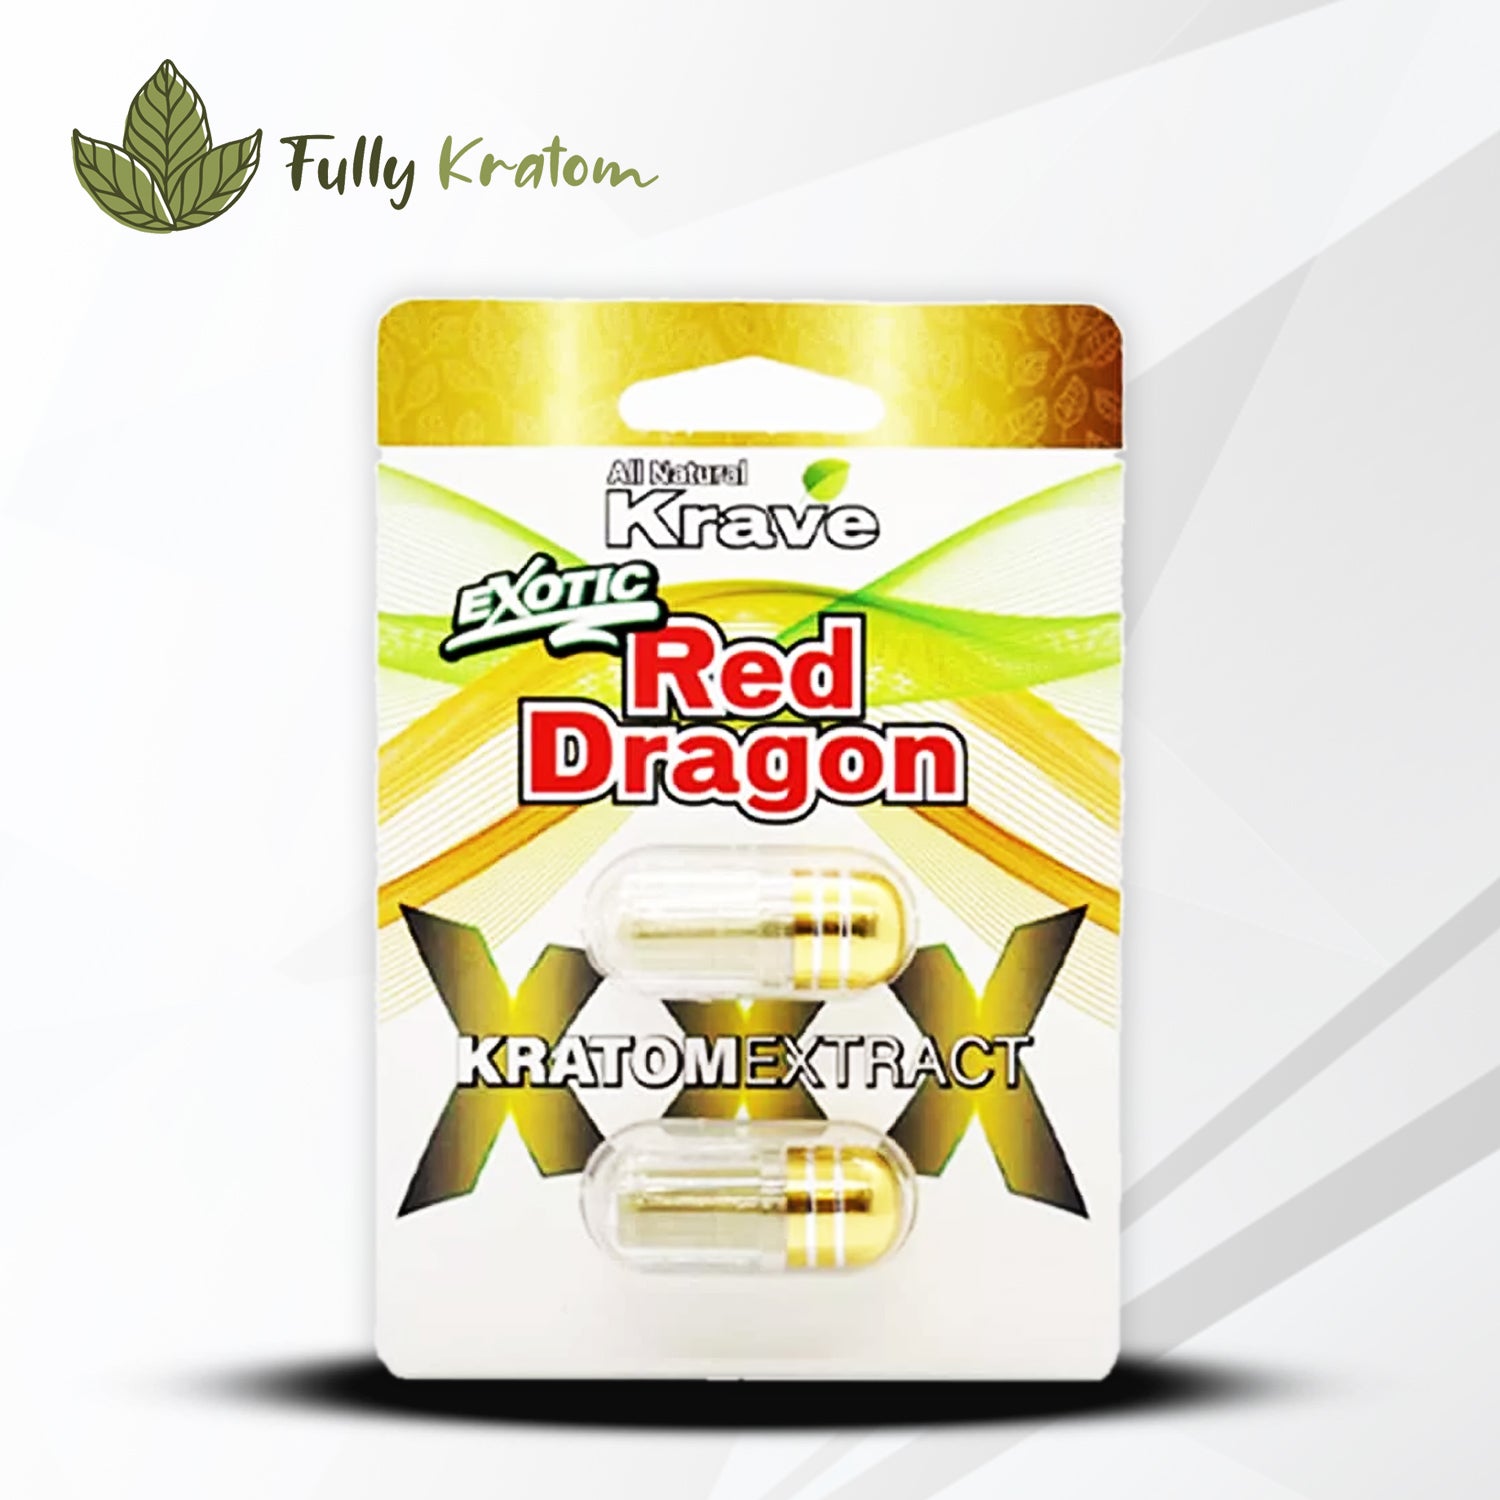 Krave Red Dragon Kratom Extract Capsule – 2 Caps